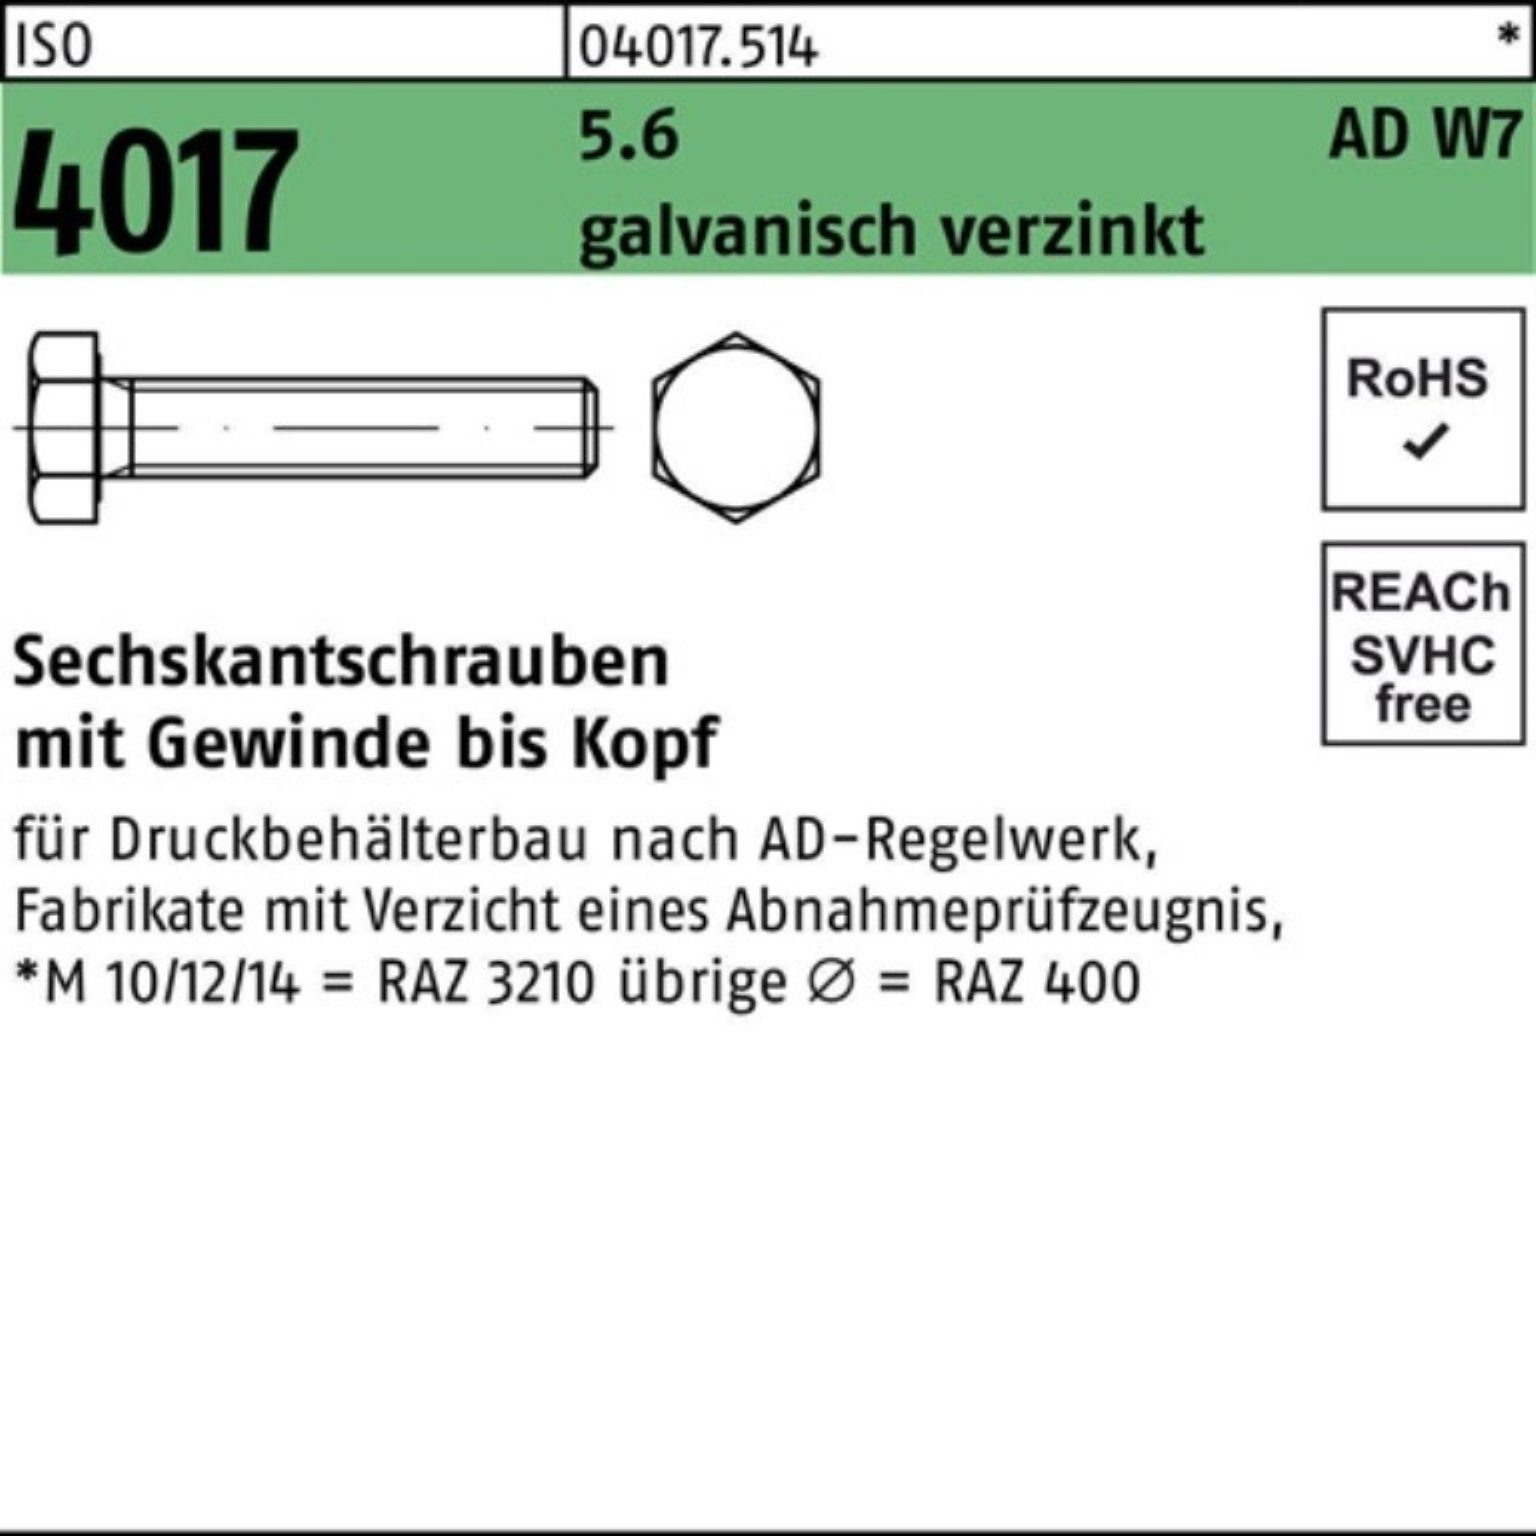 W7 Sechskantschraube 50 VG Sechskantschraube ISO AD galv.verz. Bufab M6x 5.6 200er Pack 4017 2